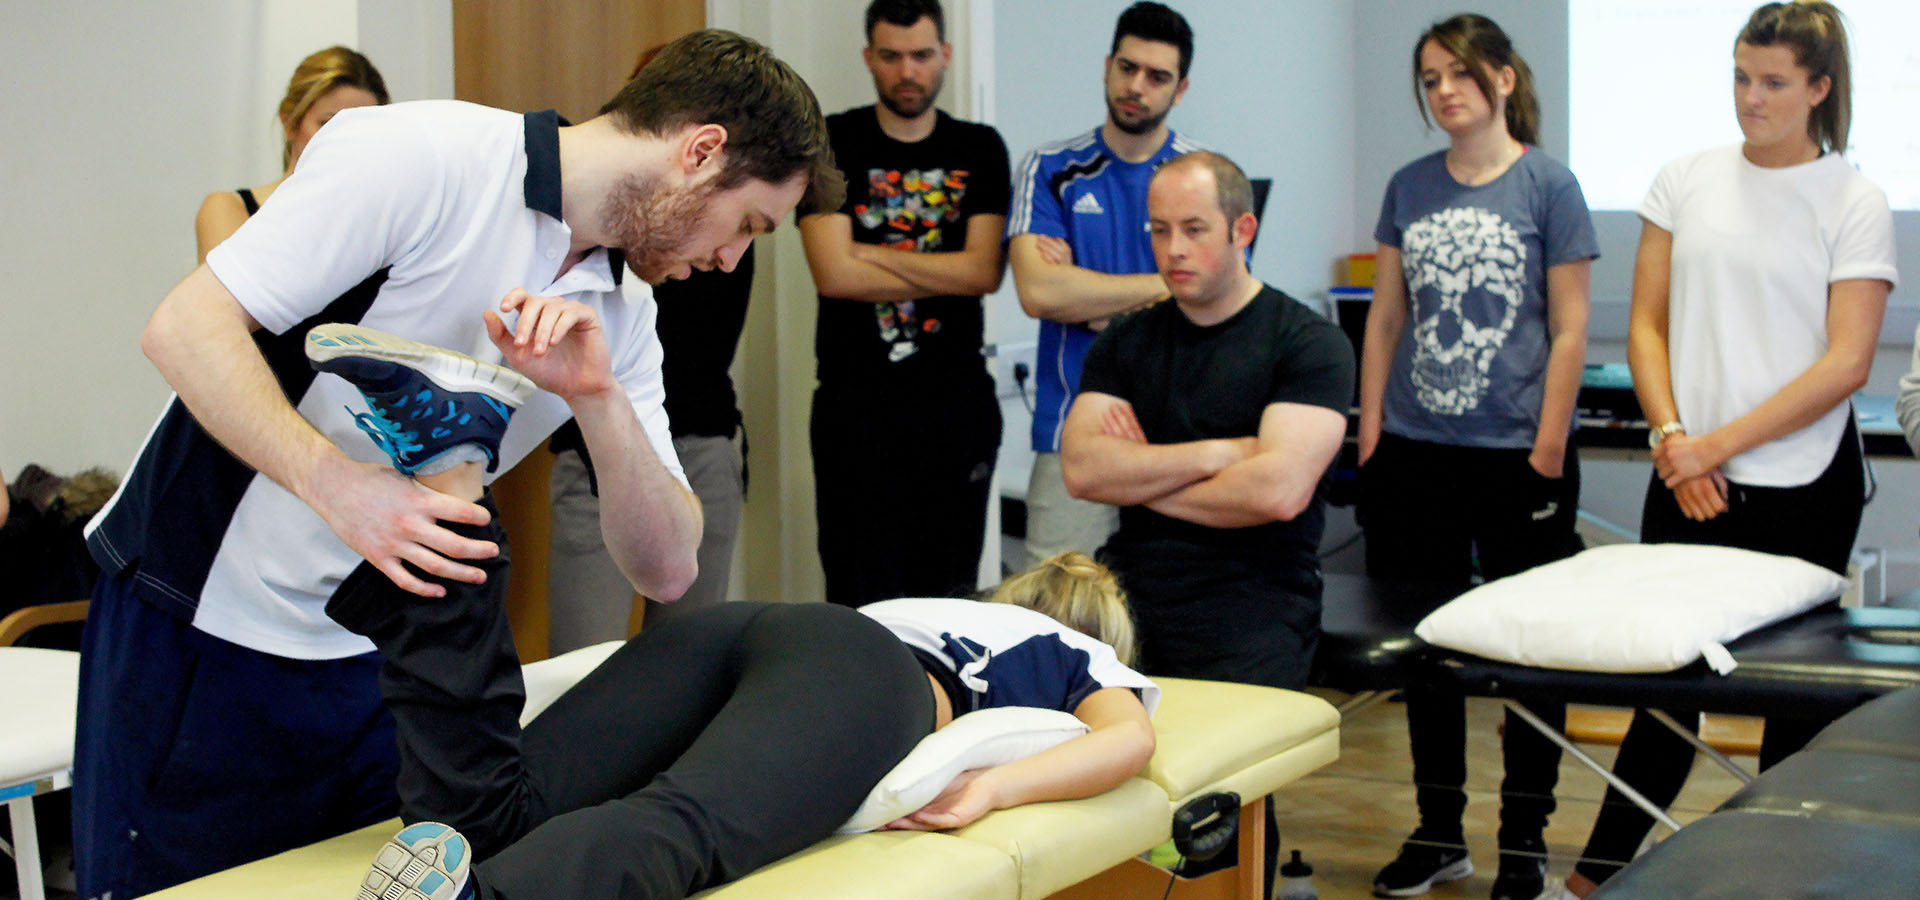 Demonstration of massage technique